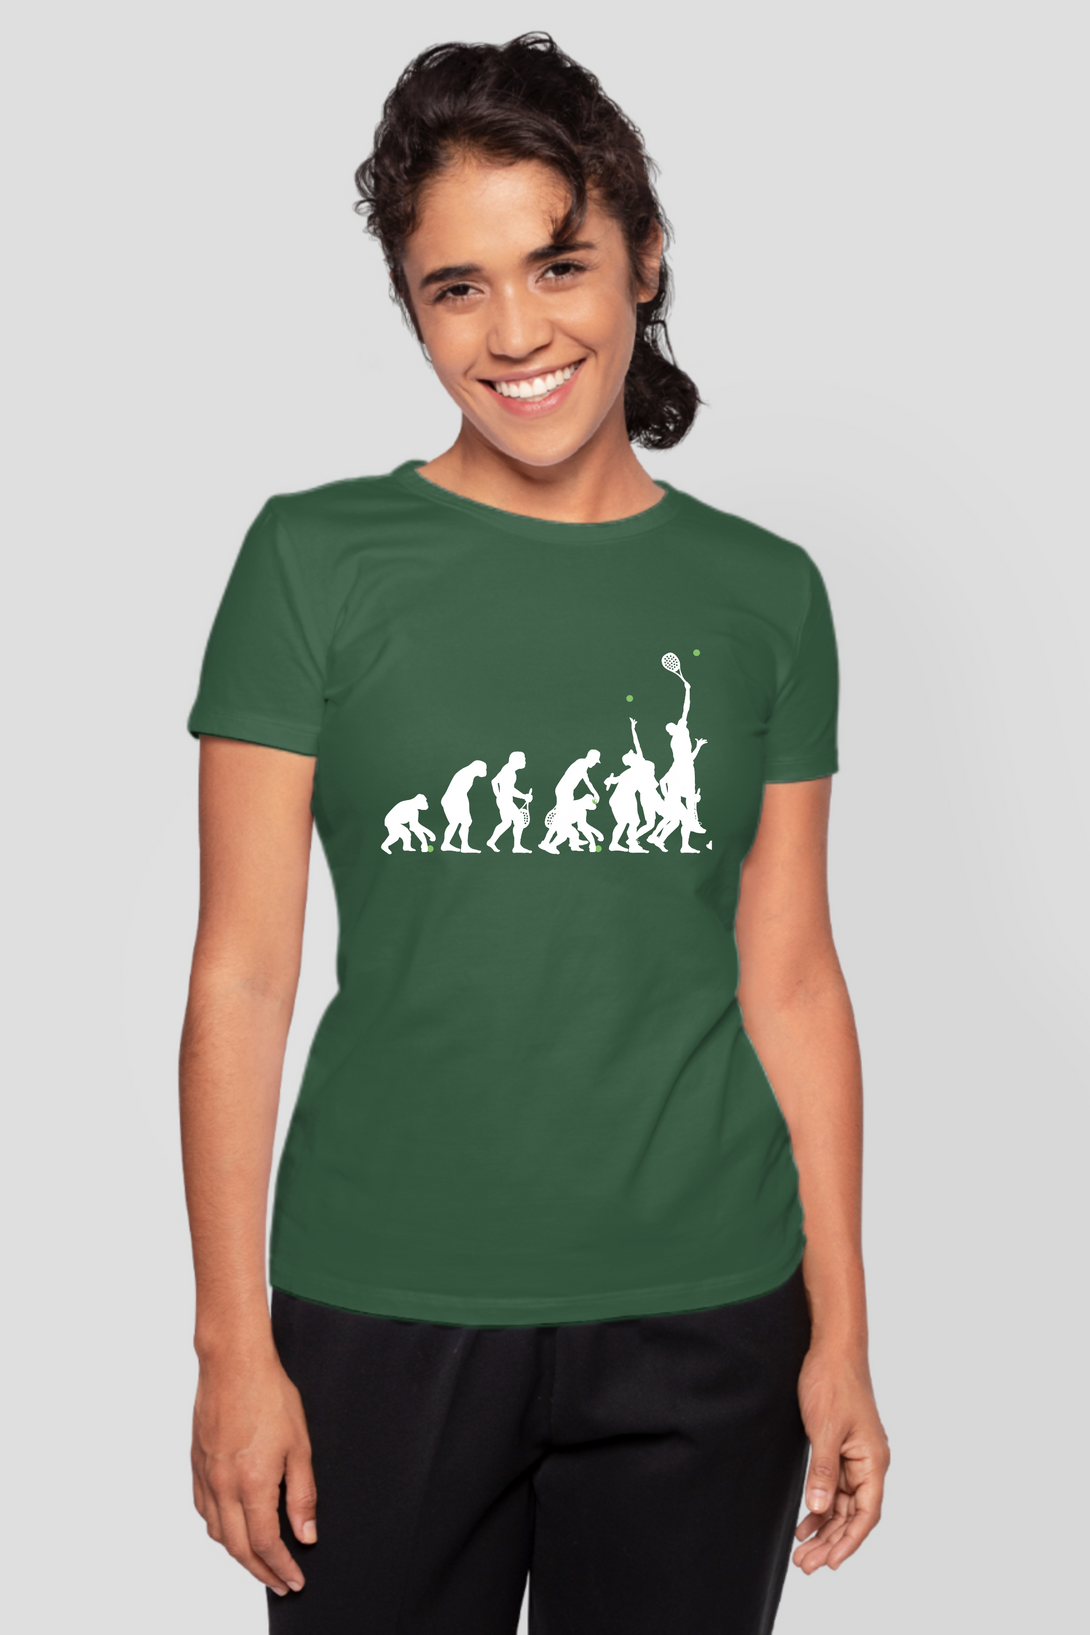 Tennis Evolution Printed T-Shirt For Women - WowWaves - 8